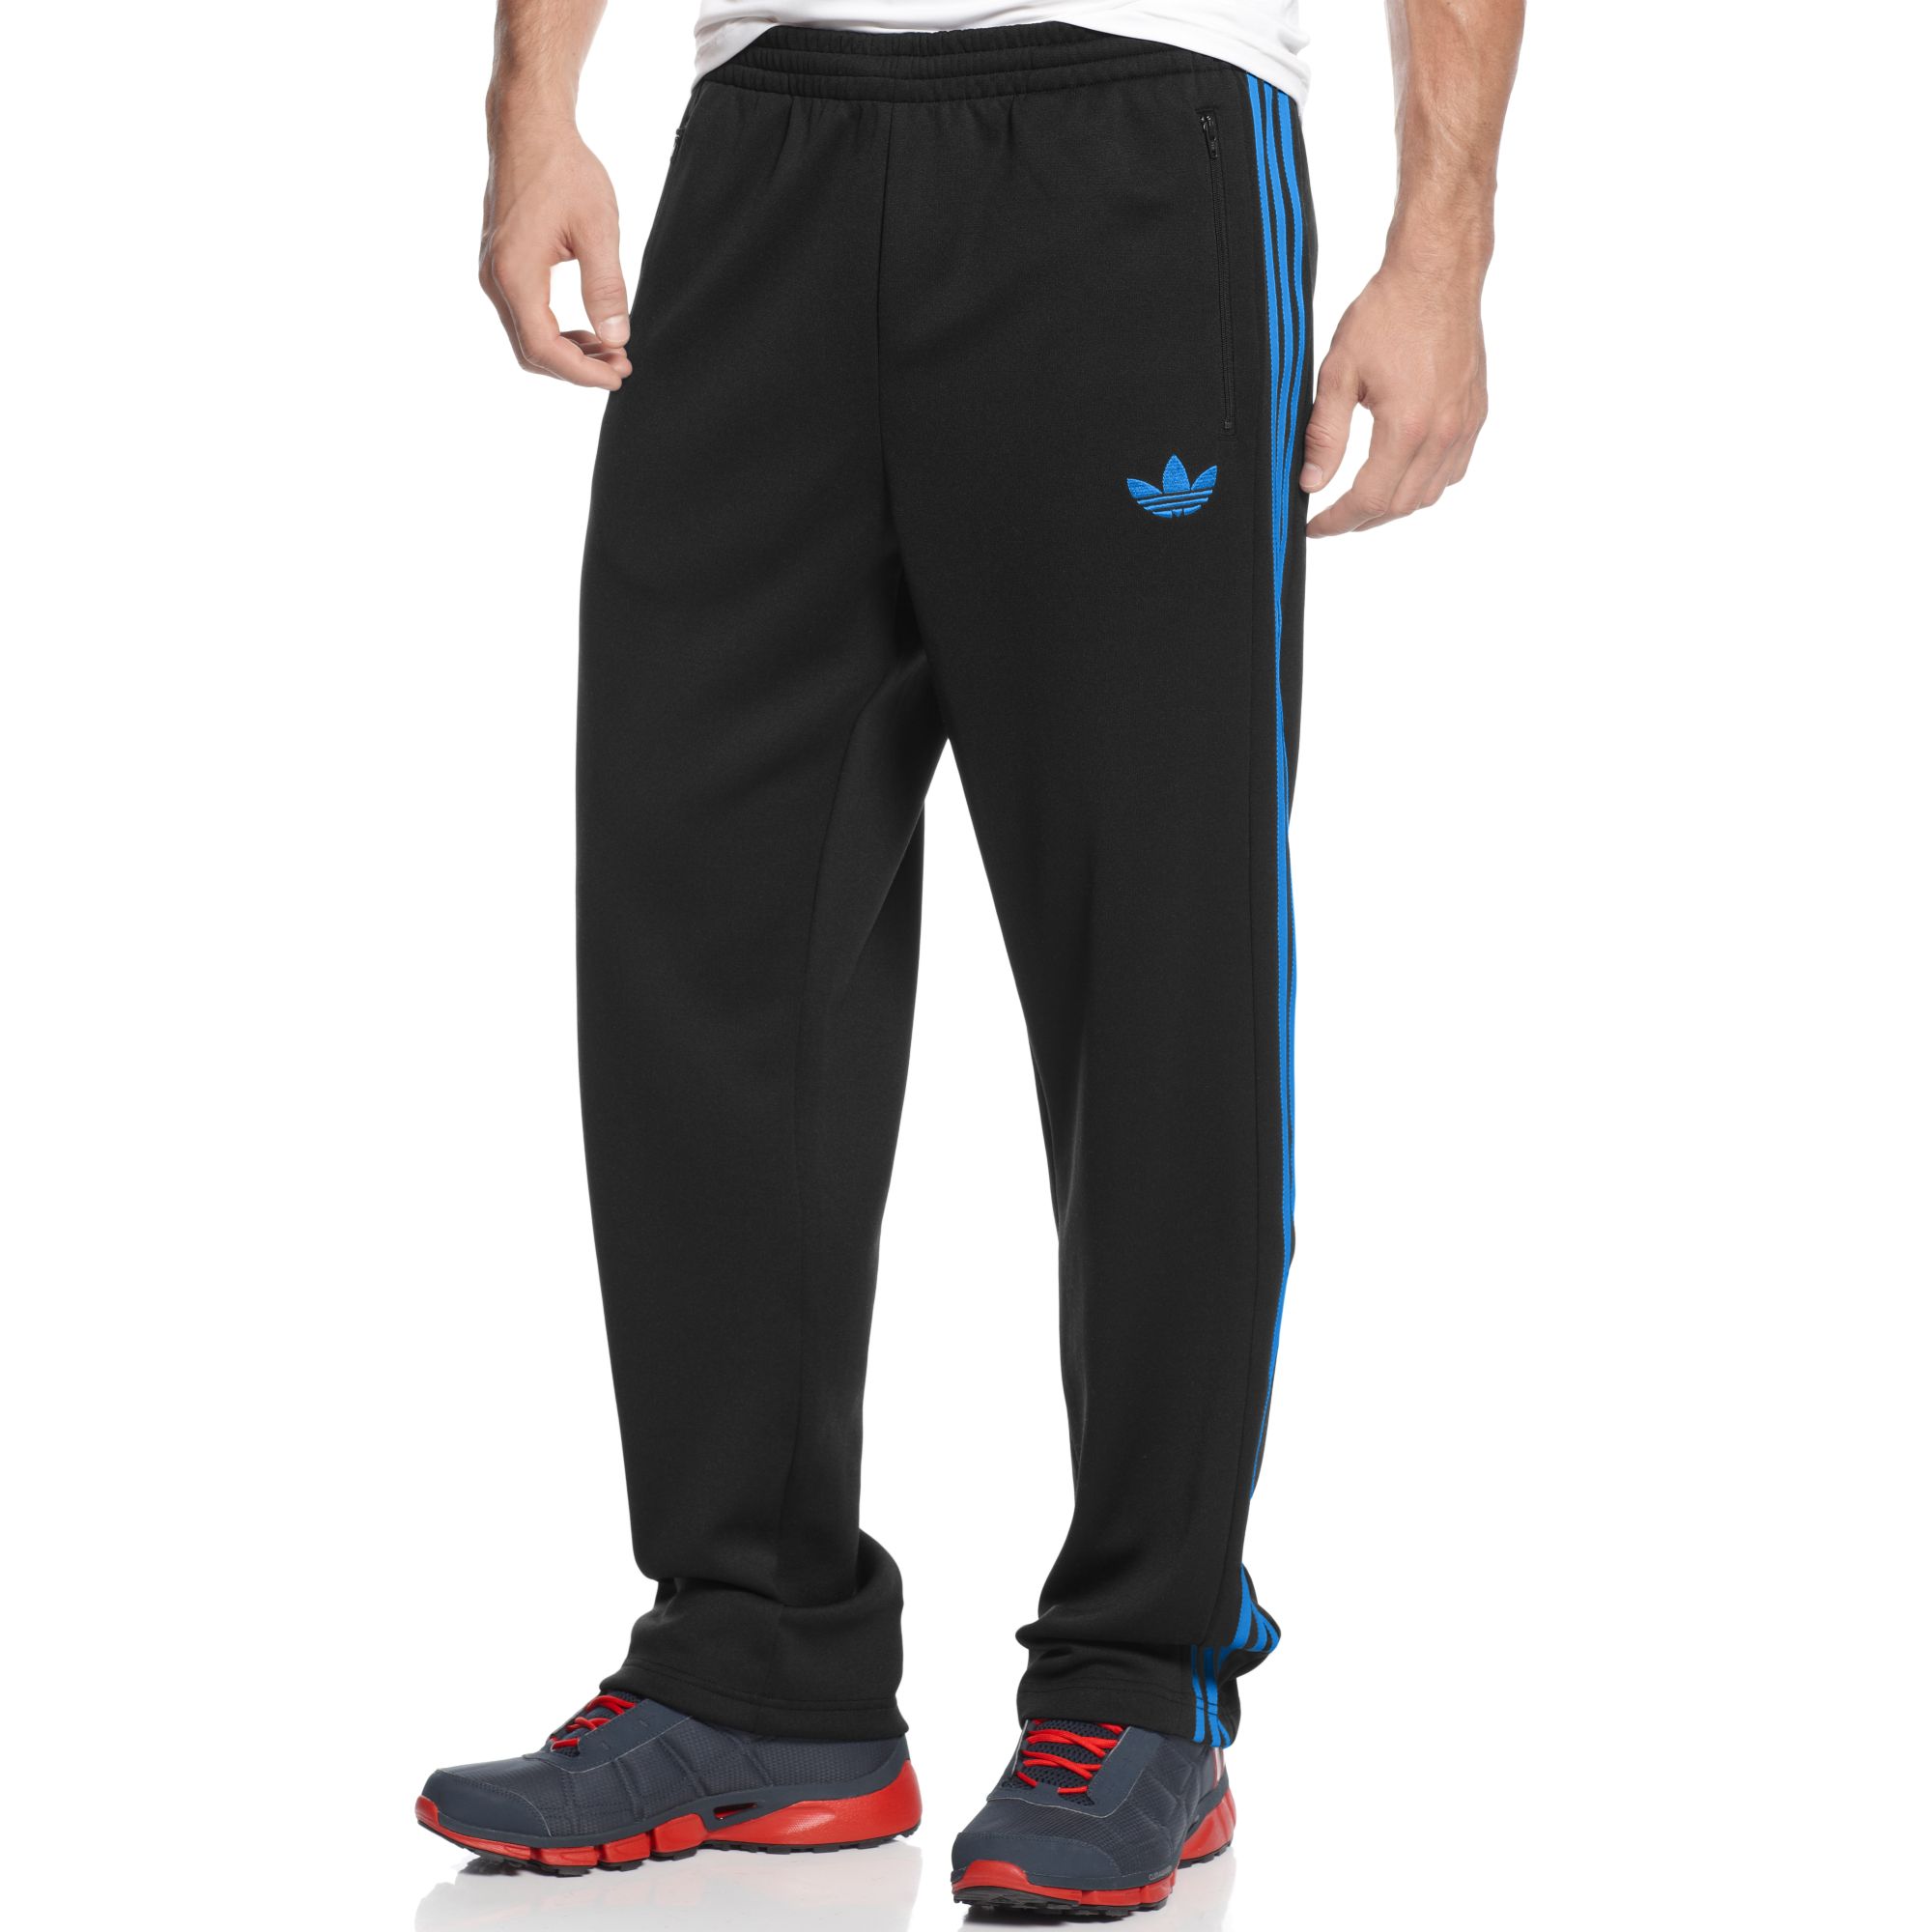 Lyst - Adidas Originals Adiicon Track Pants in Blue for Men